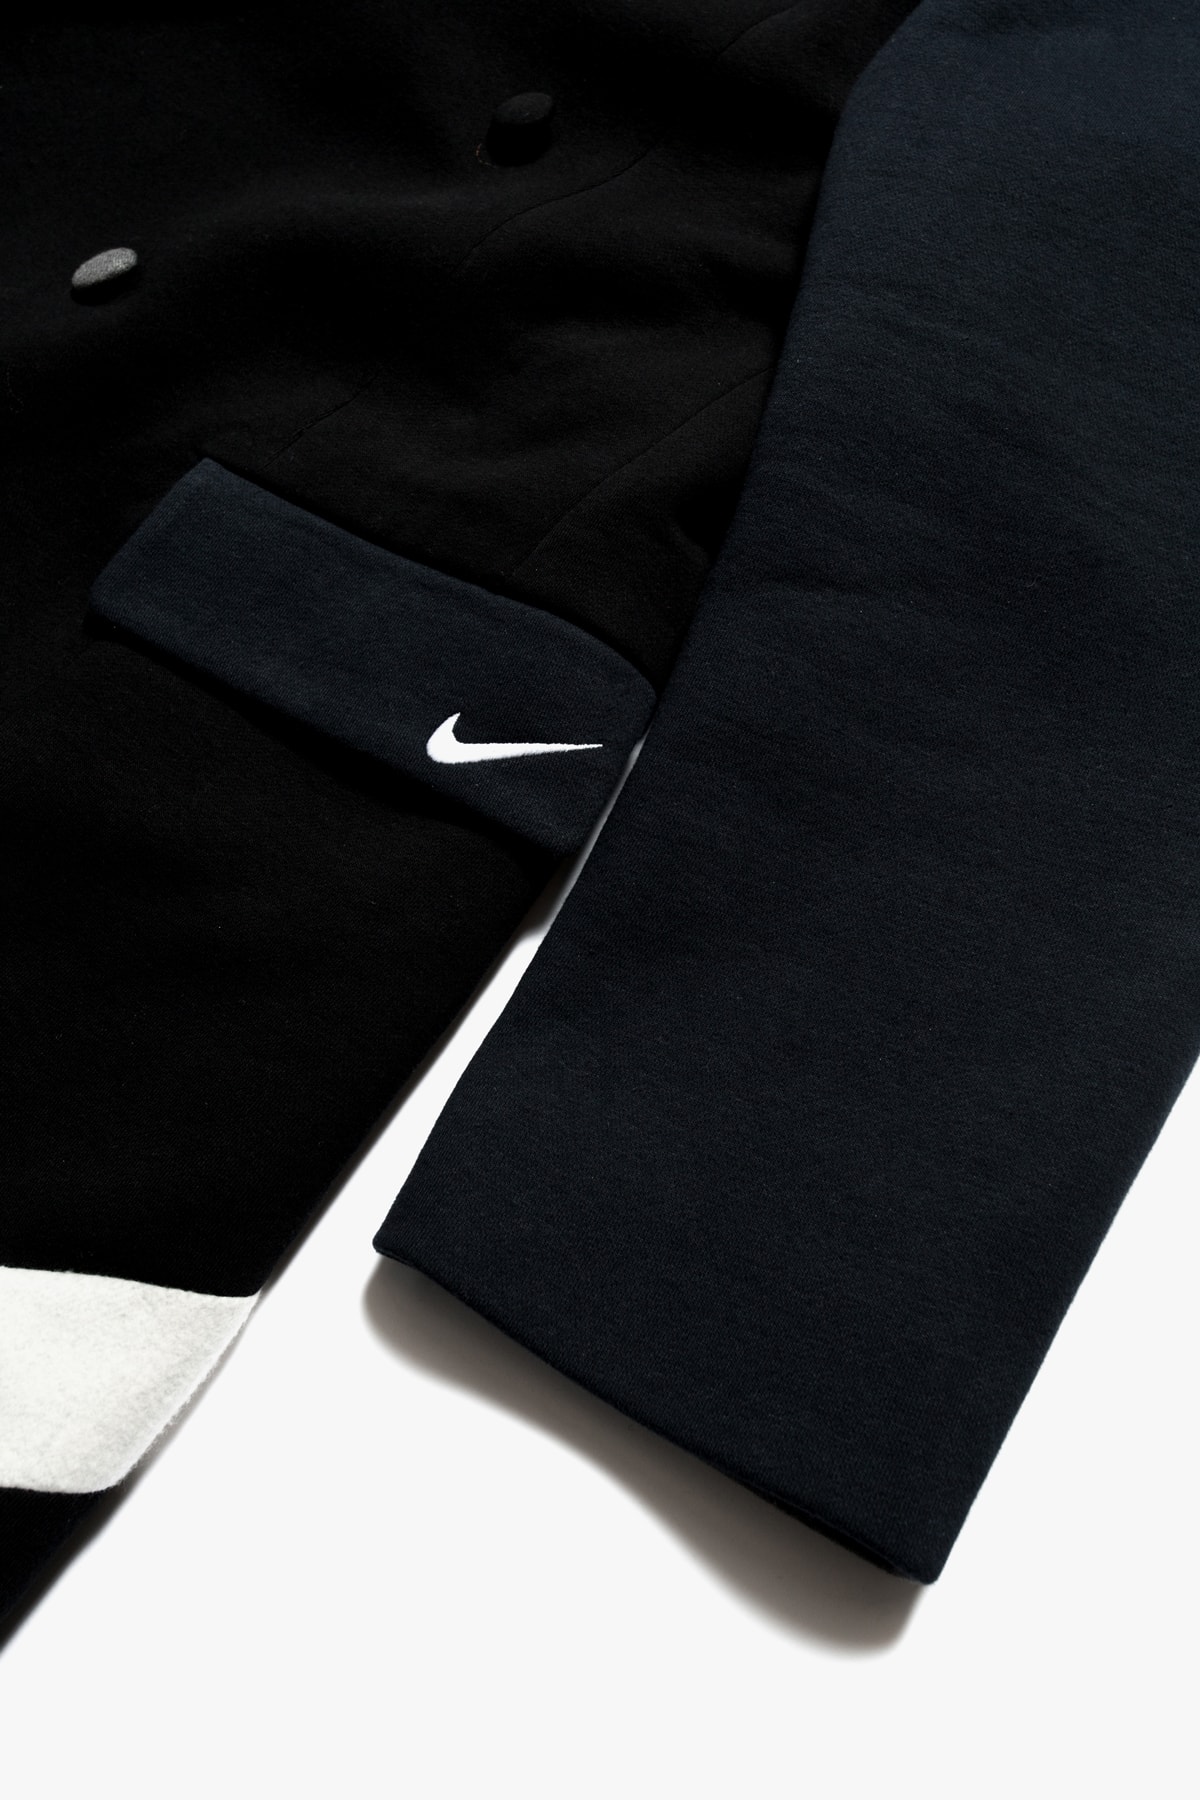 clothsurgeon 使用 Nike 舊物改造全新拼接大衣和機能馬甲